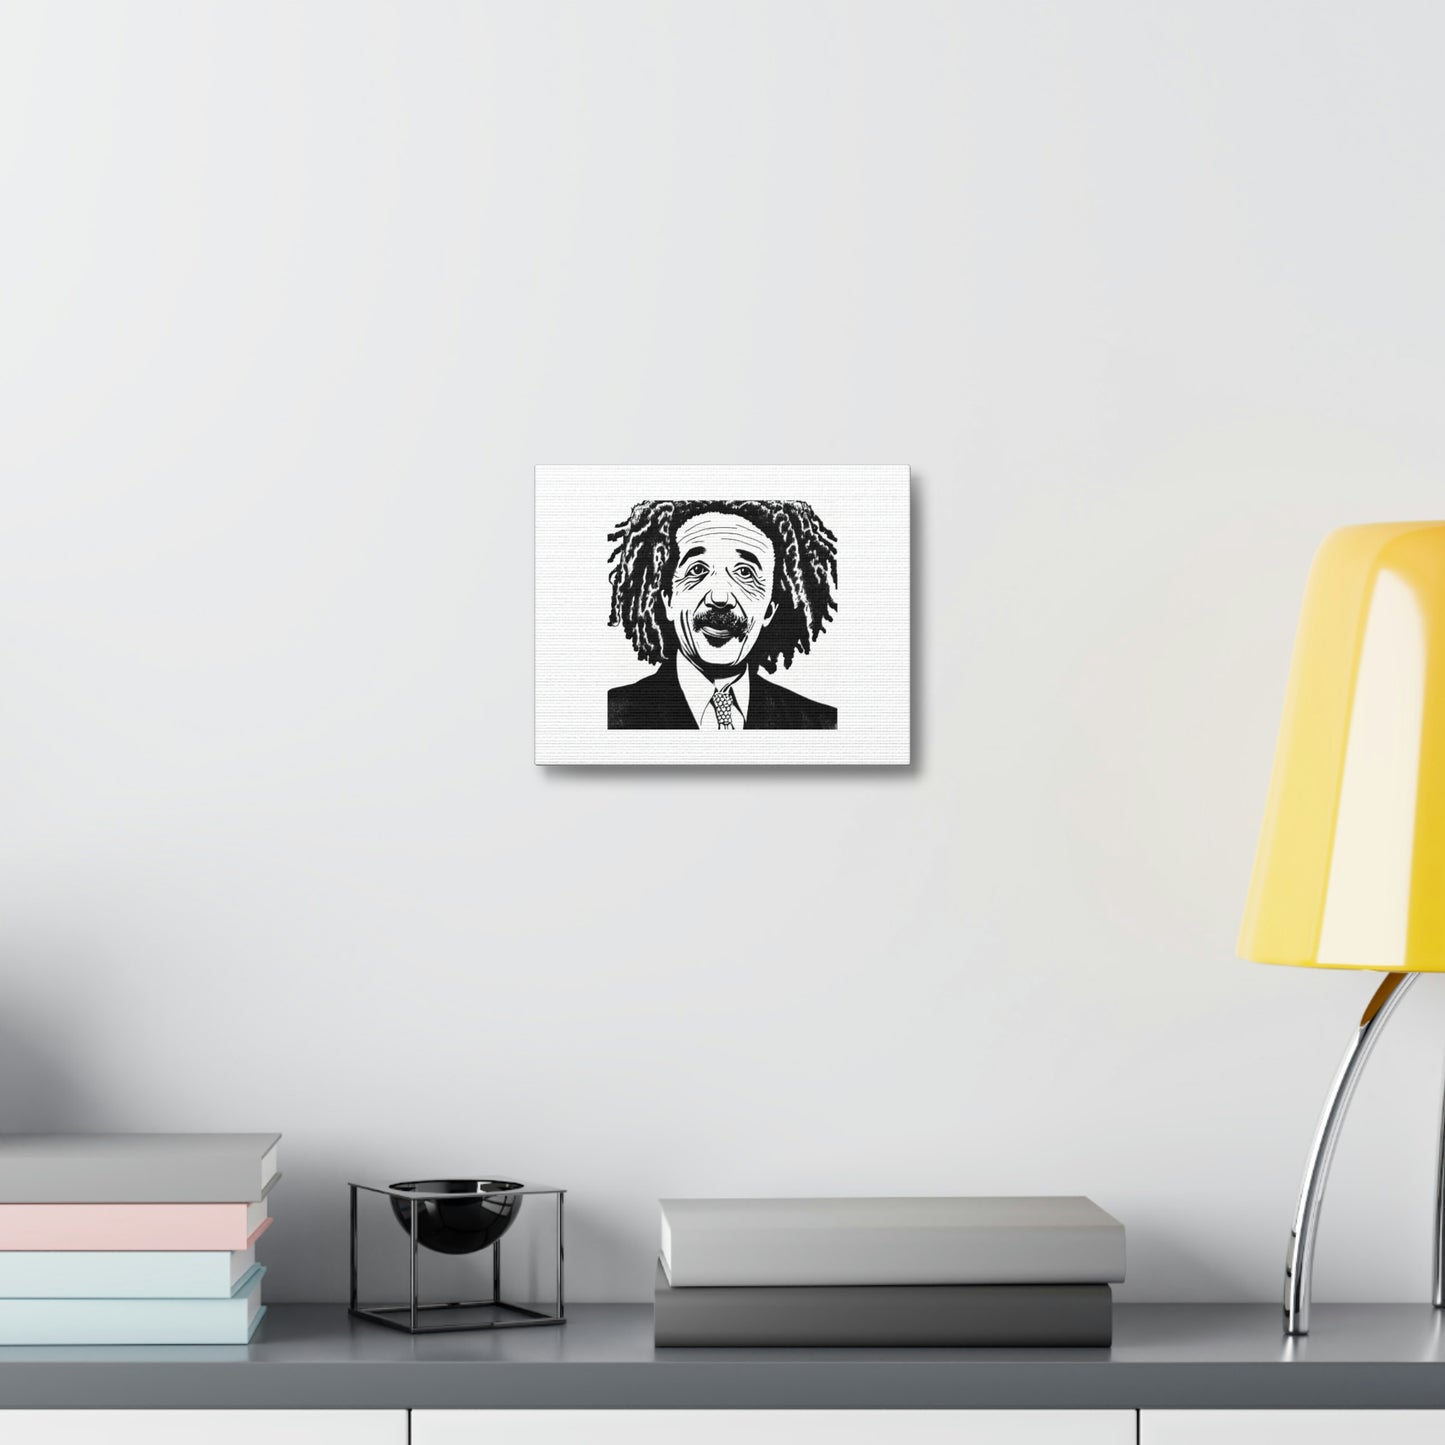 Albert Einstein With Bob Marley Hairstyle Digital Art 'Designed by AI' on Canvas